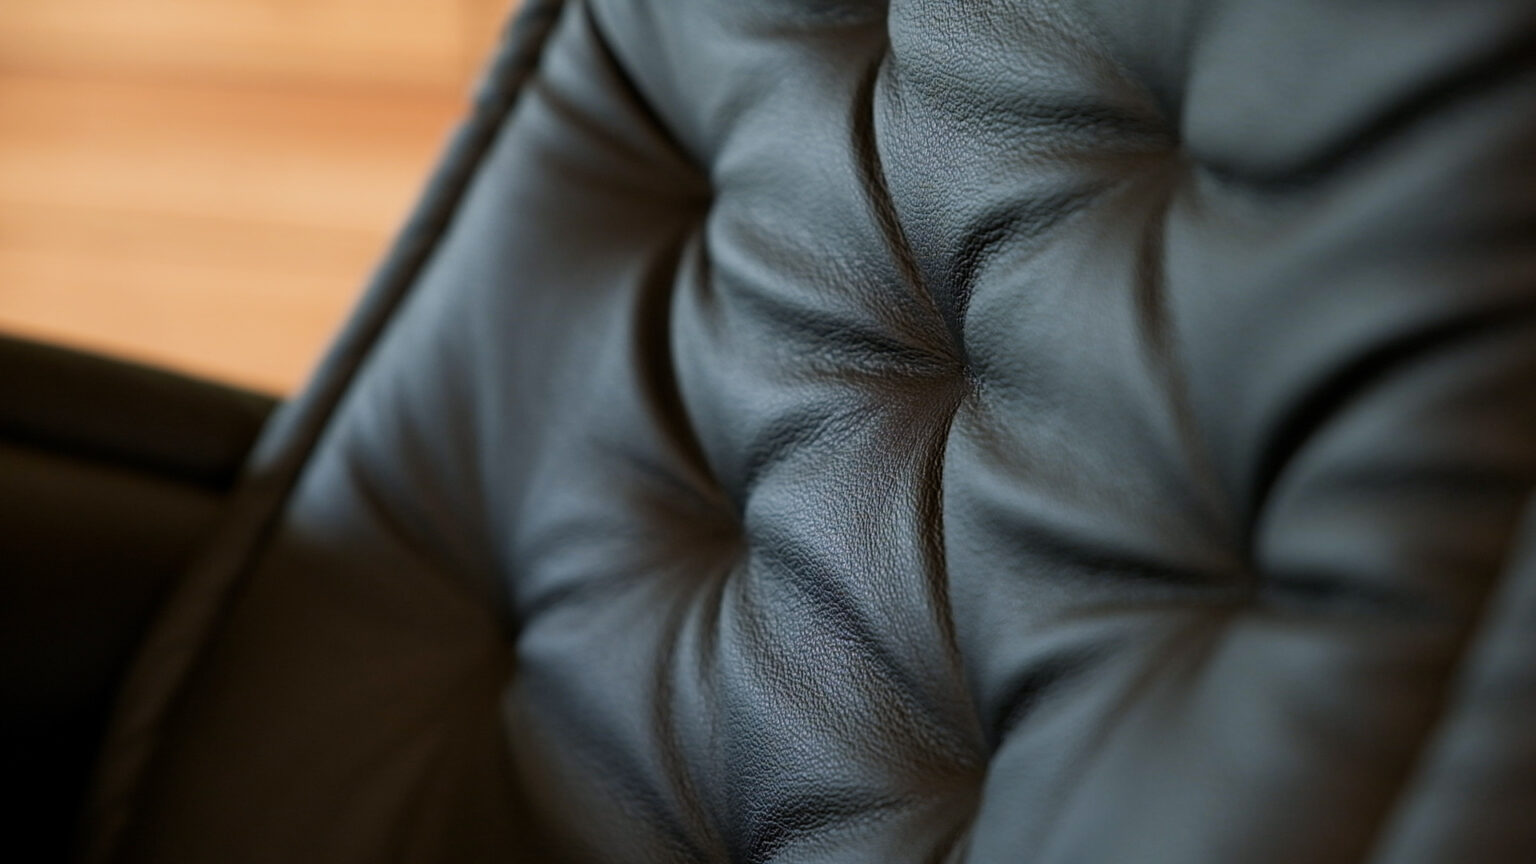 Royal-signature-paloma-black-leather-detail